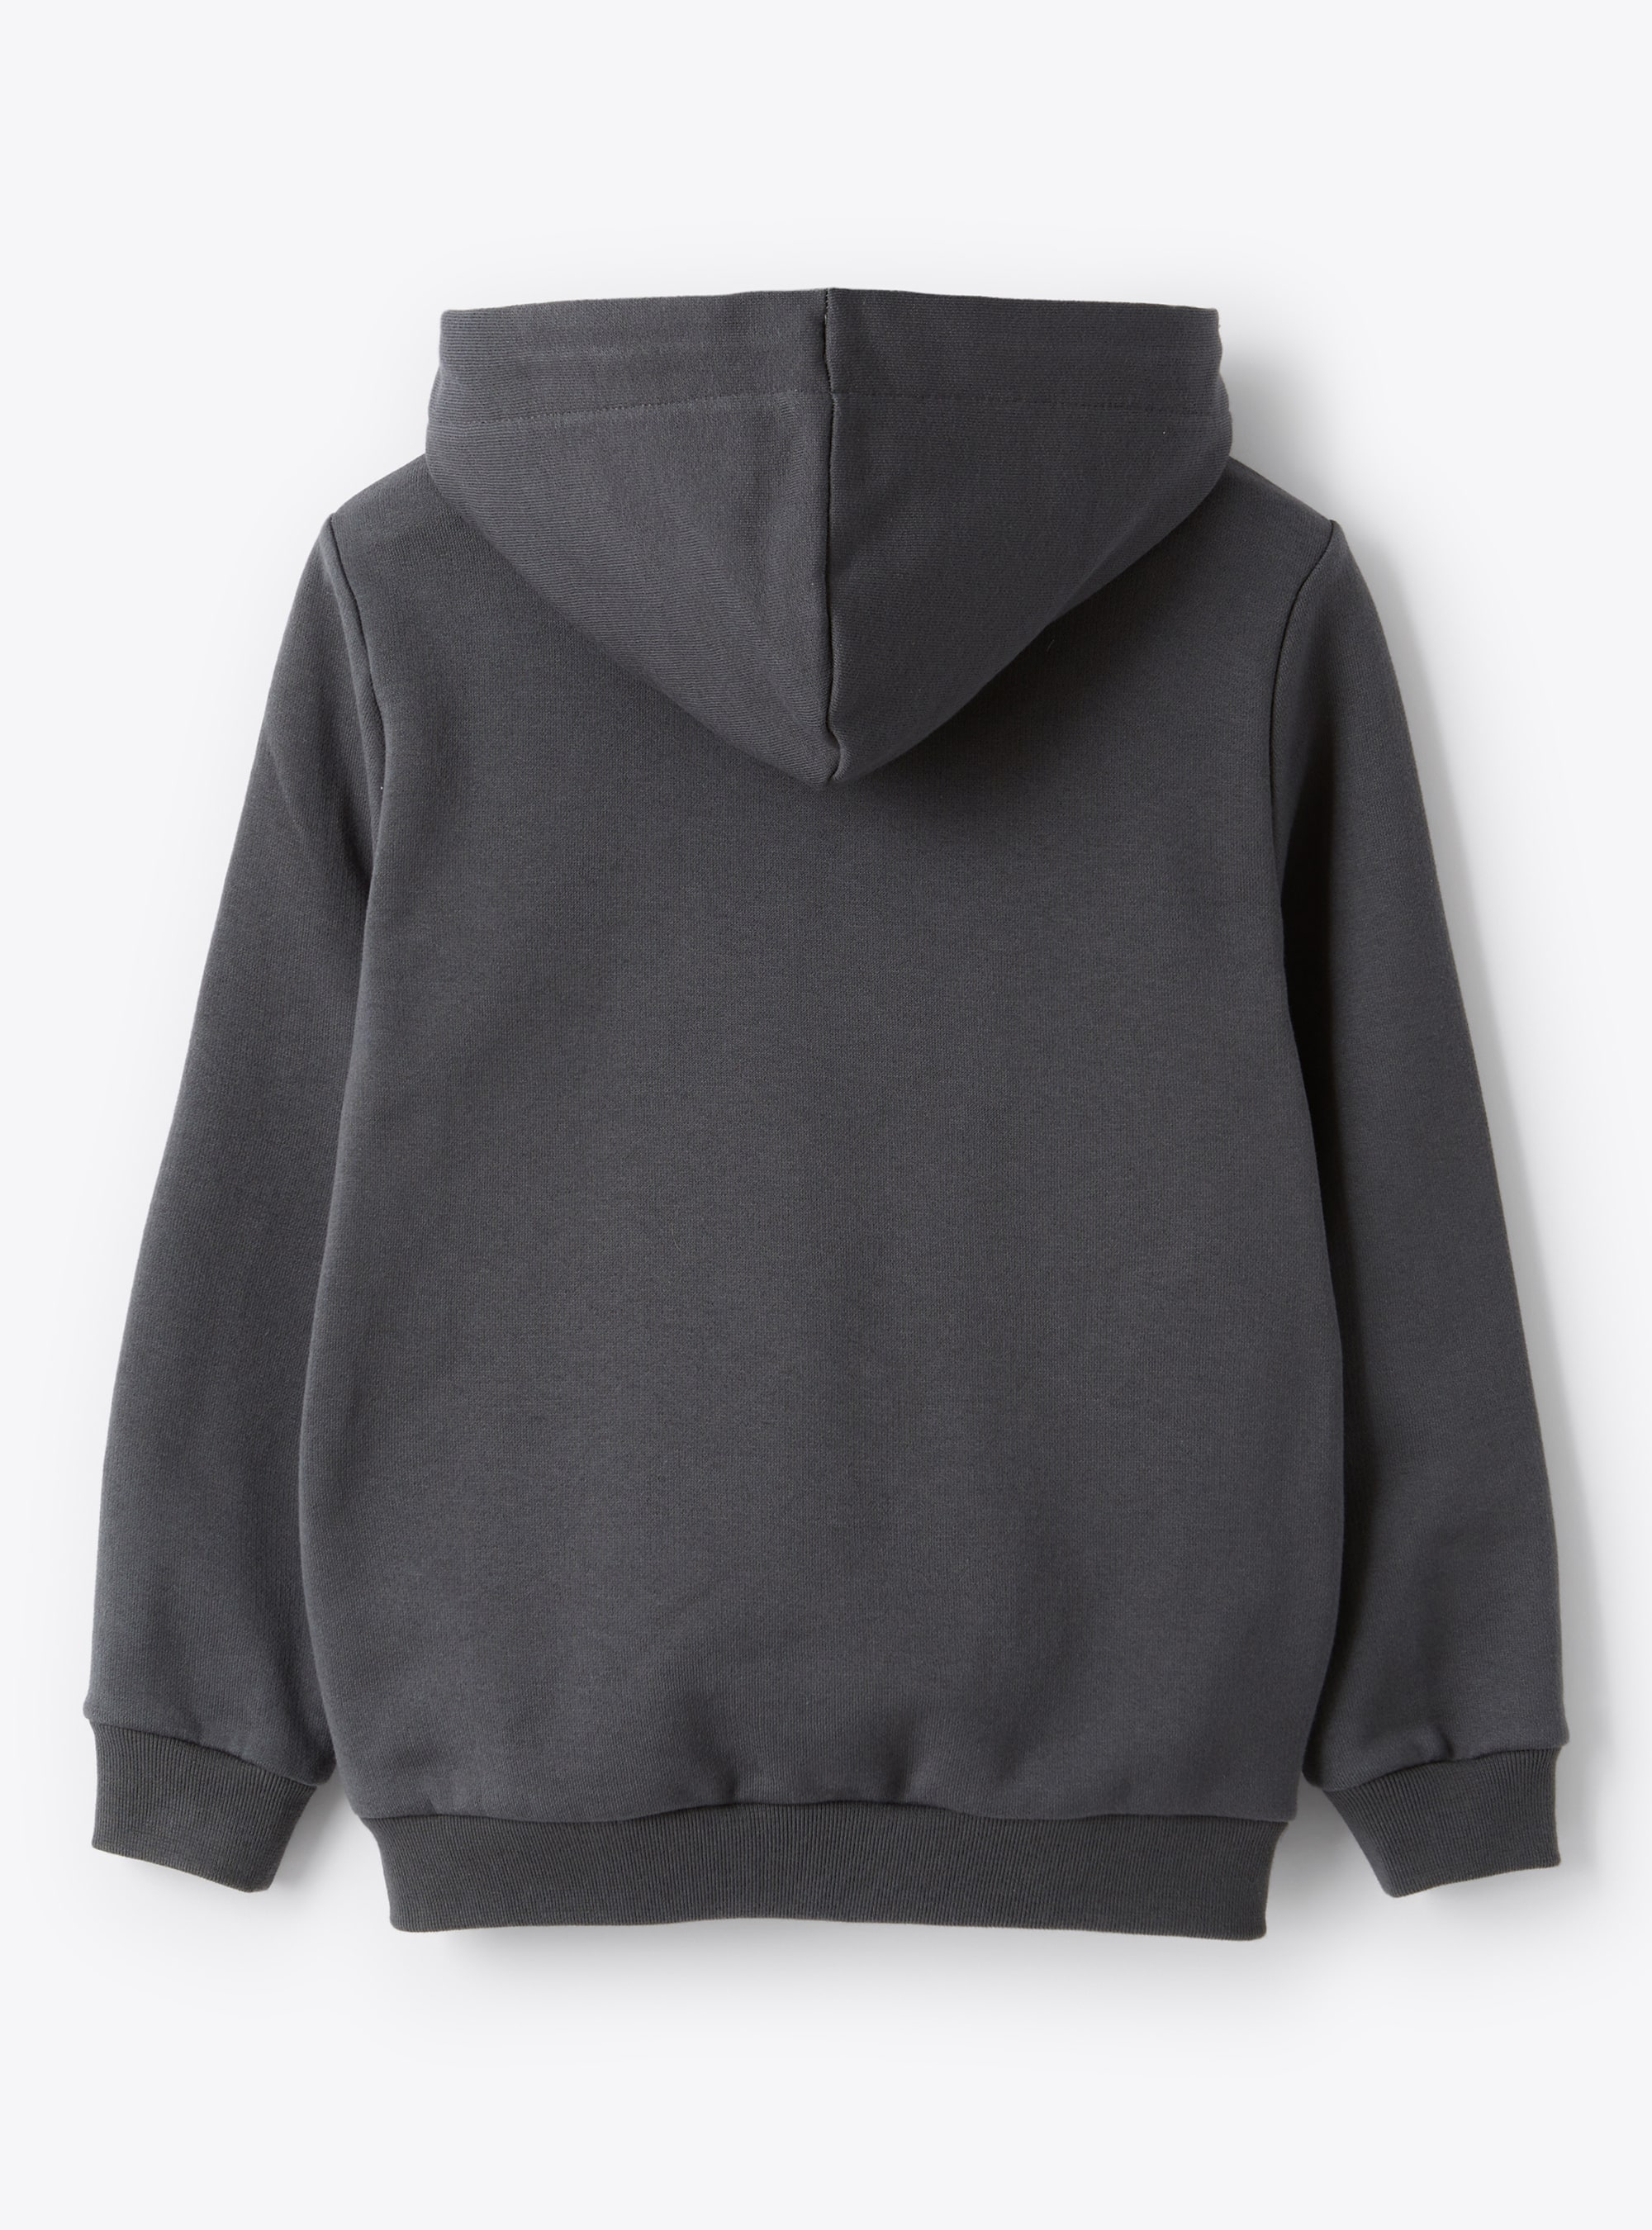 Sweatshirtjacke mit Kapuze anthrazit - Grau | Il Gufo